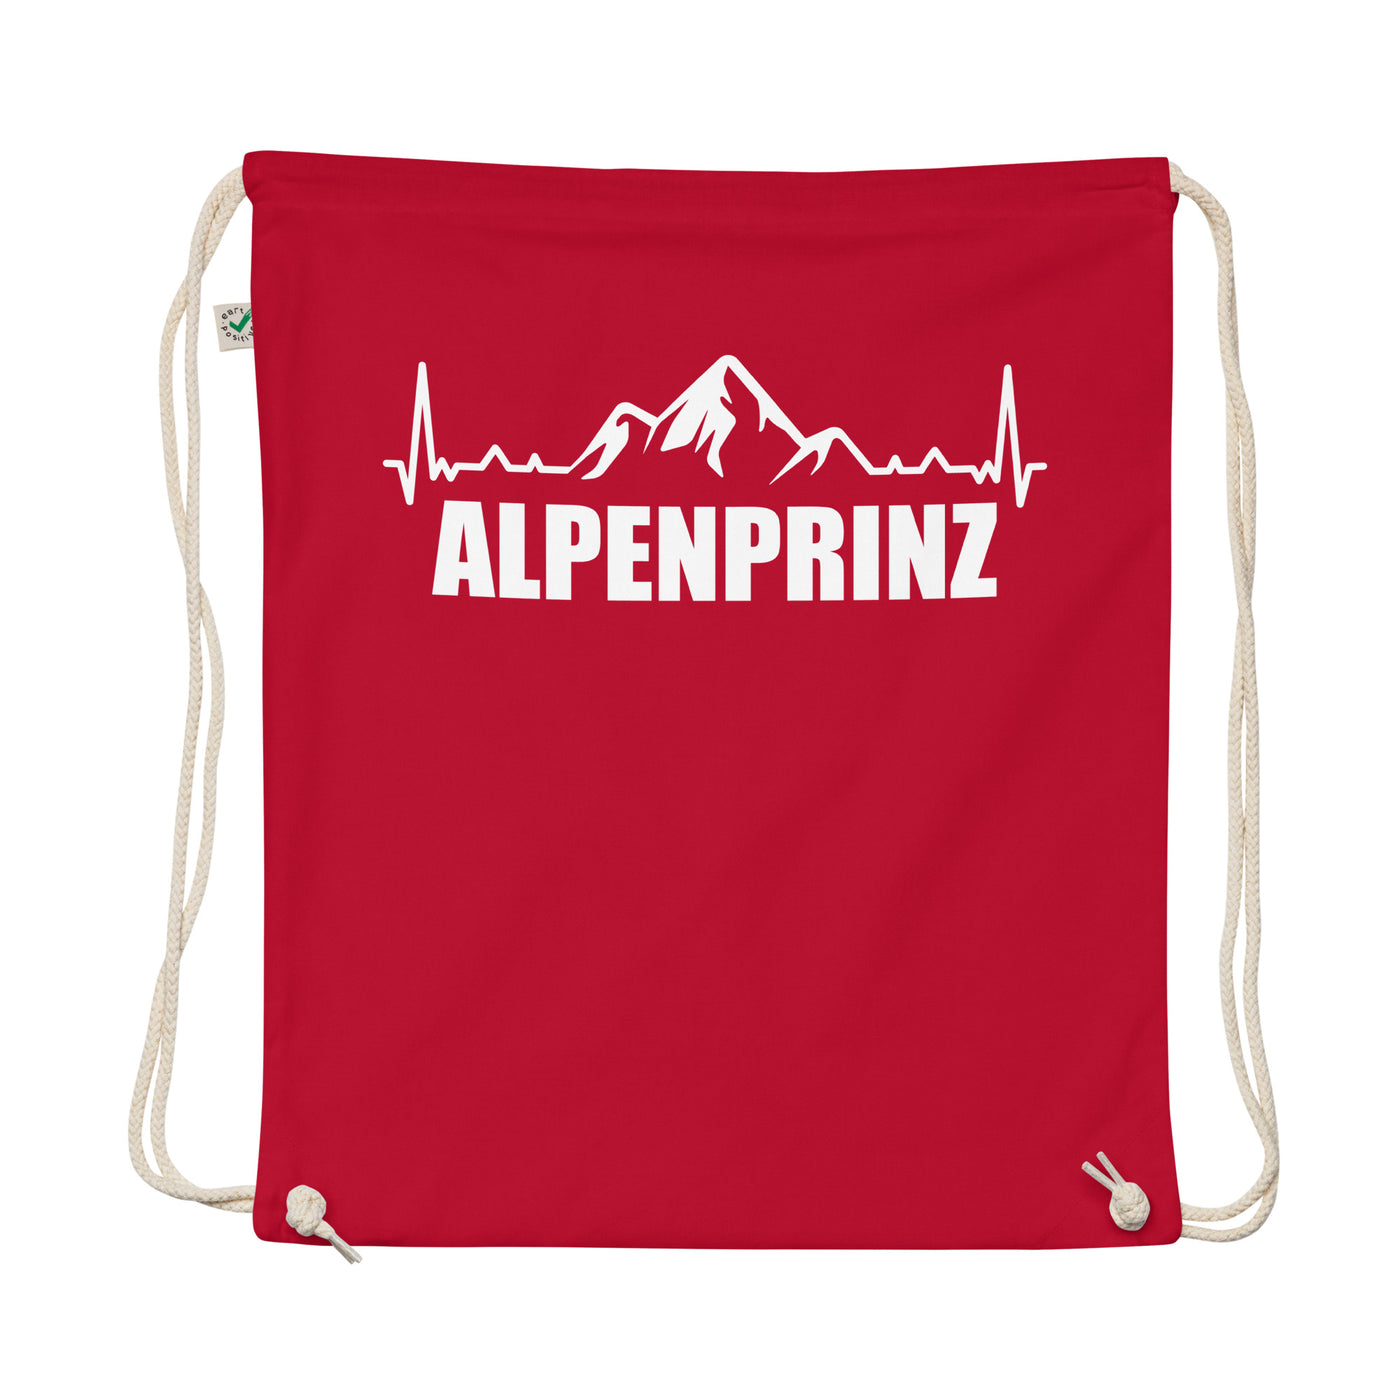 Alpenprinz 1 - Organic Turnbeutel berge